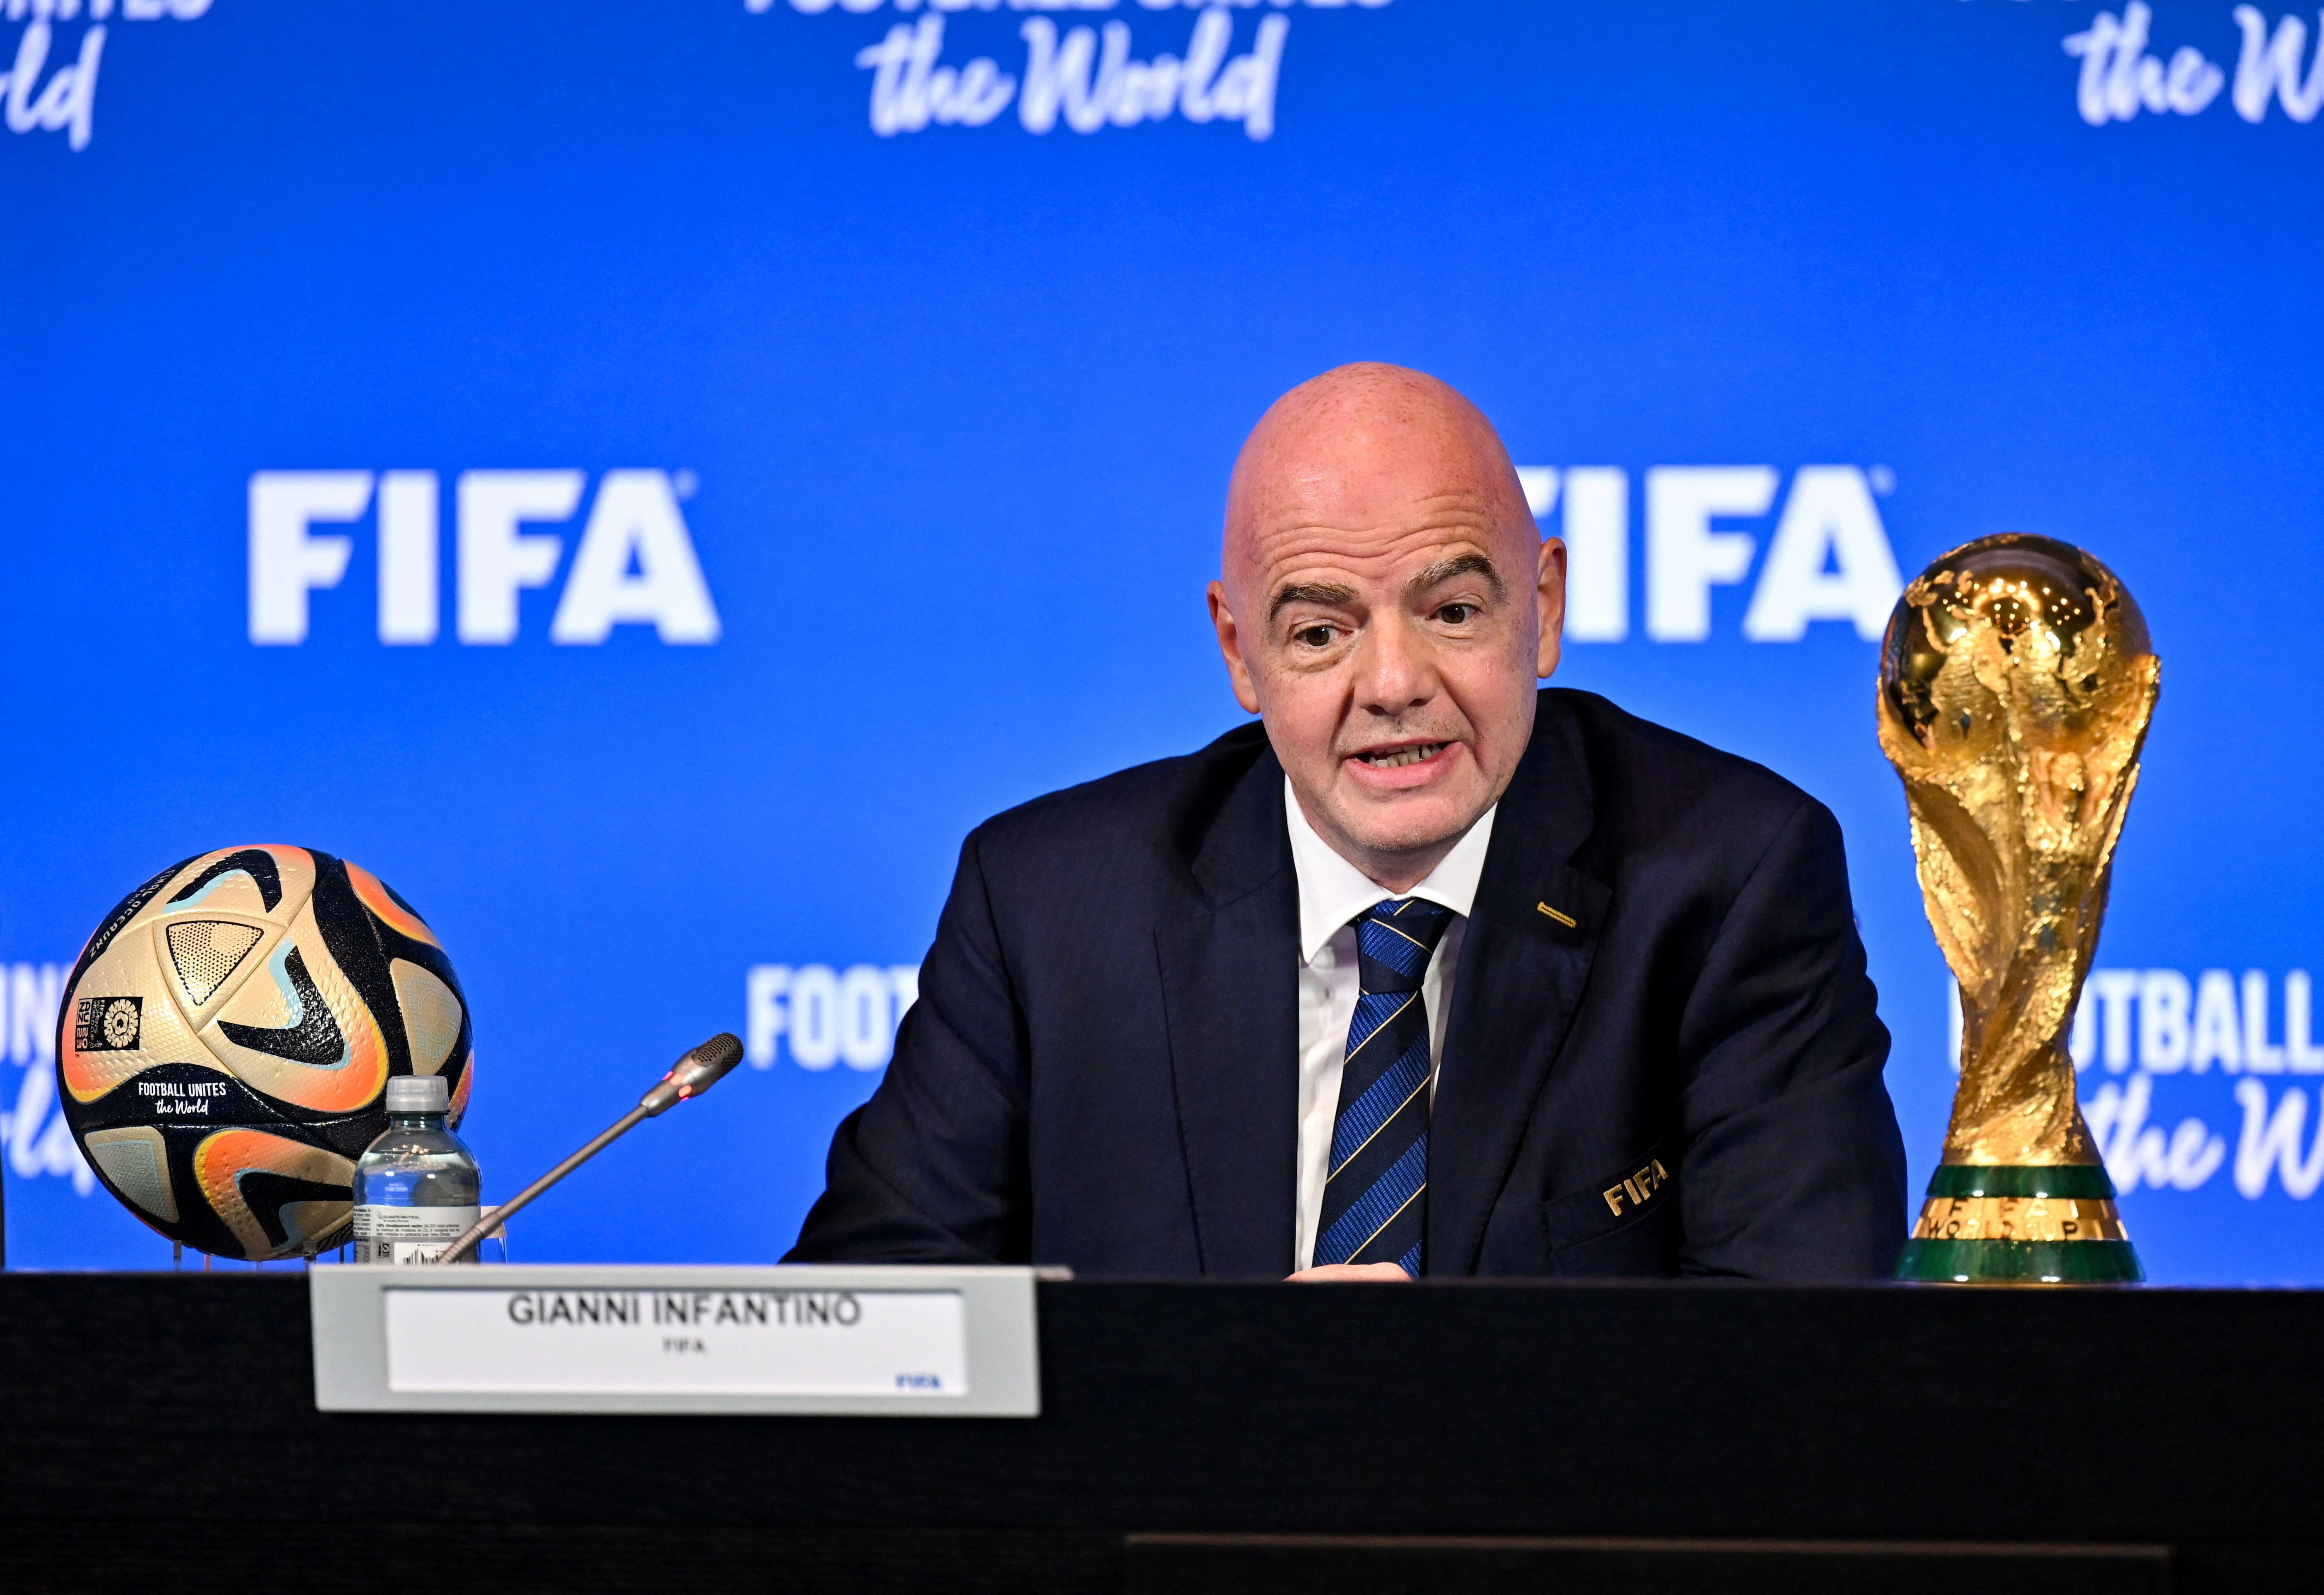 El presidente de la FIFA, Gianni Infantino, junto a la Copa del Mundo (FIFA/Handout via REUTERS)